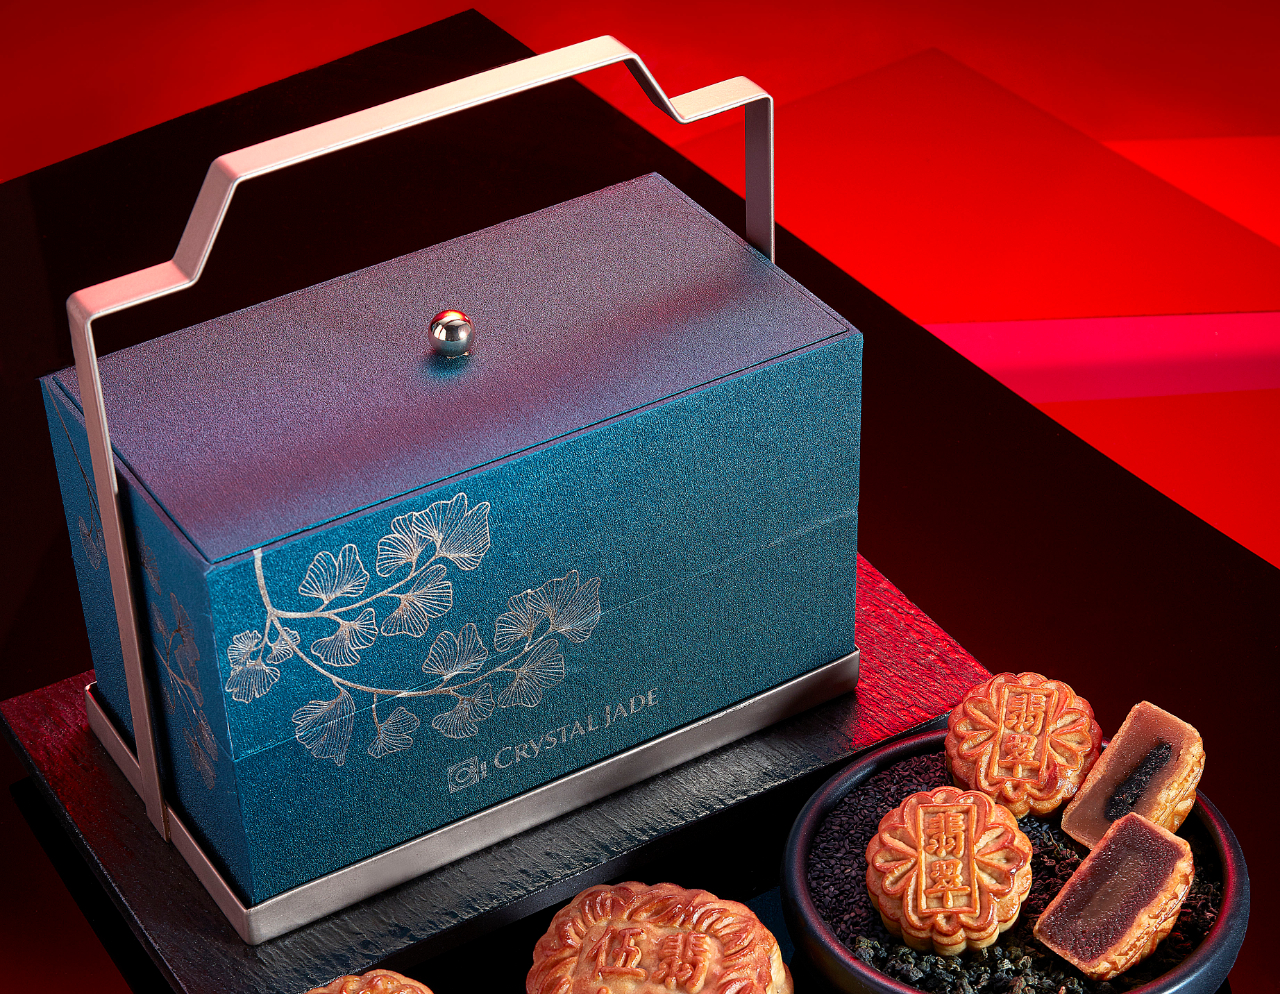 Crystal Jade palatial mooncake box